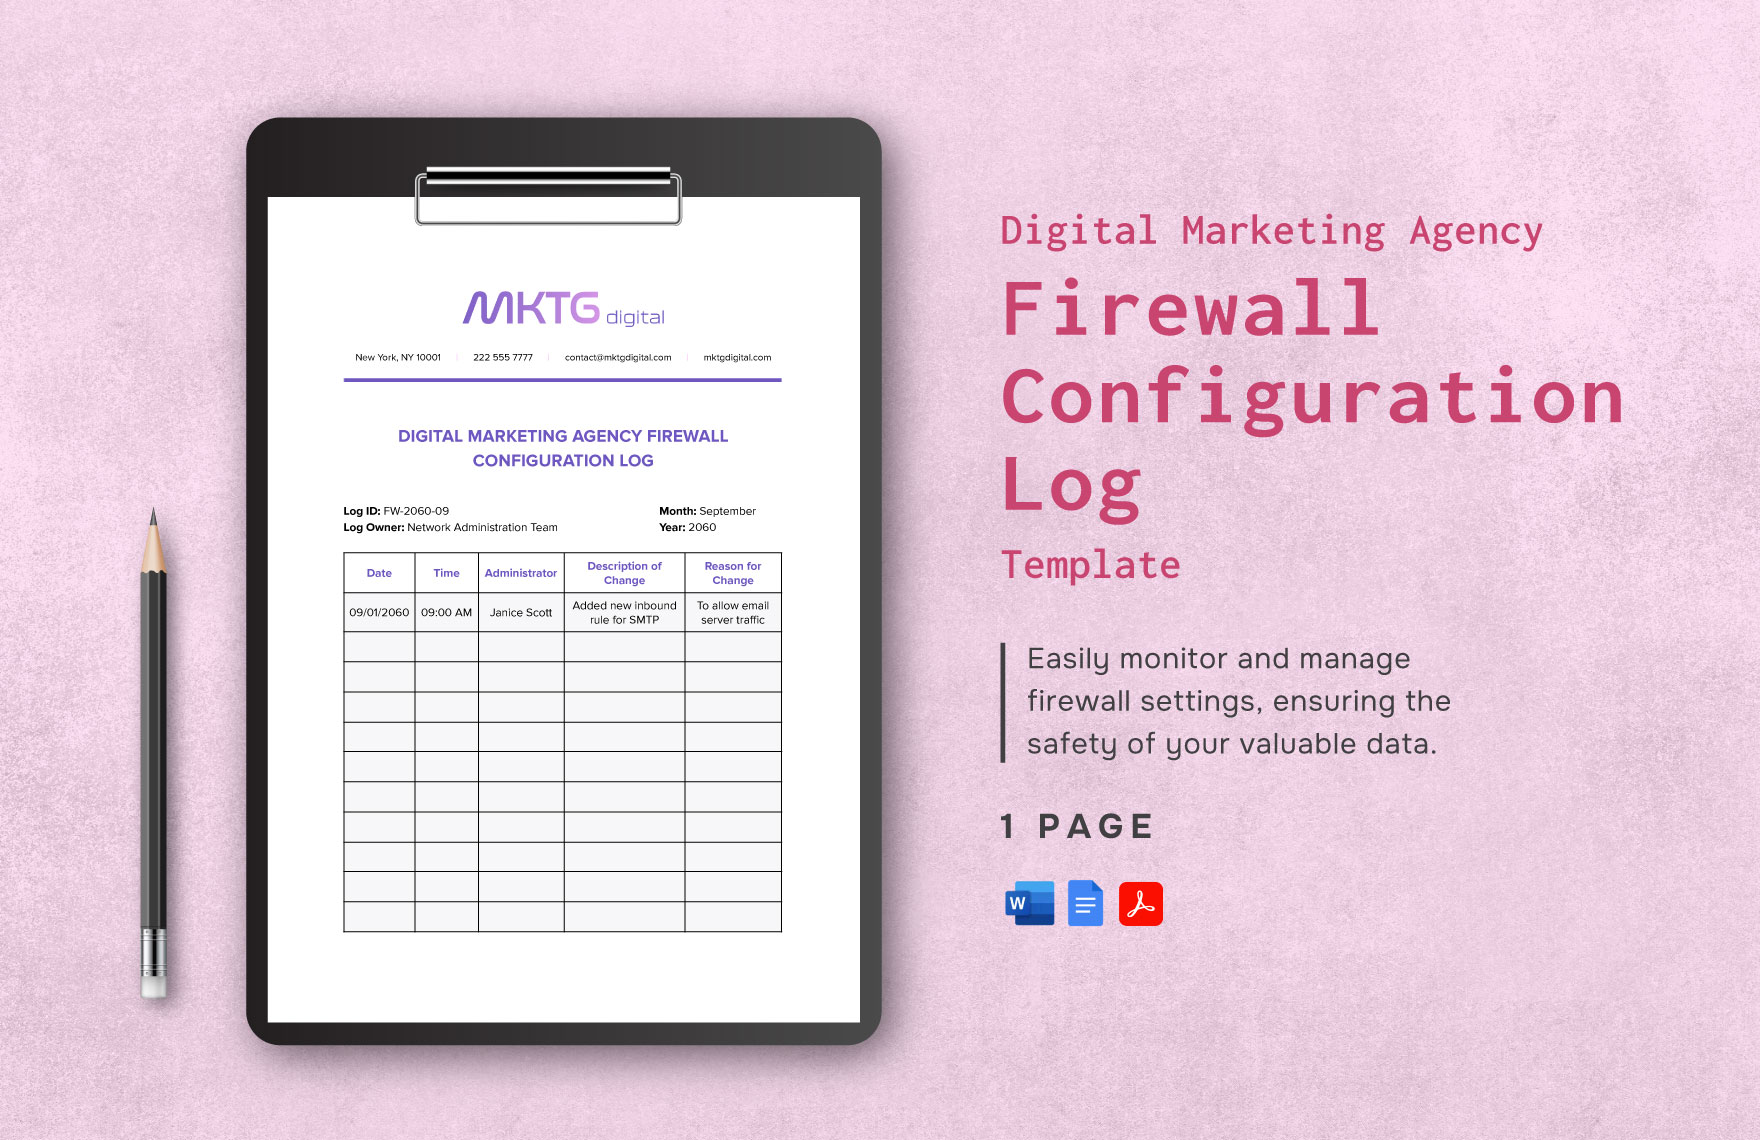 Digital Marketing Agency Firewall Configuration Log Template in Word, Google Docs, PDF